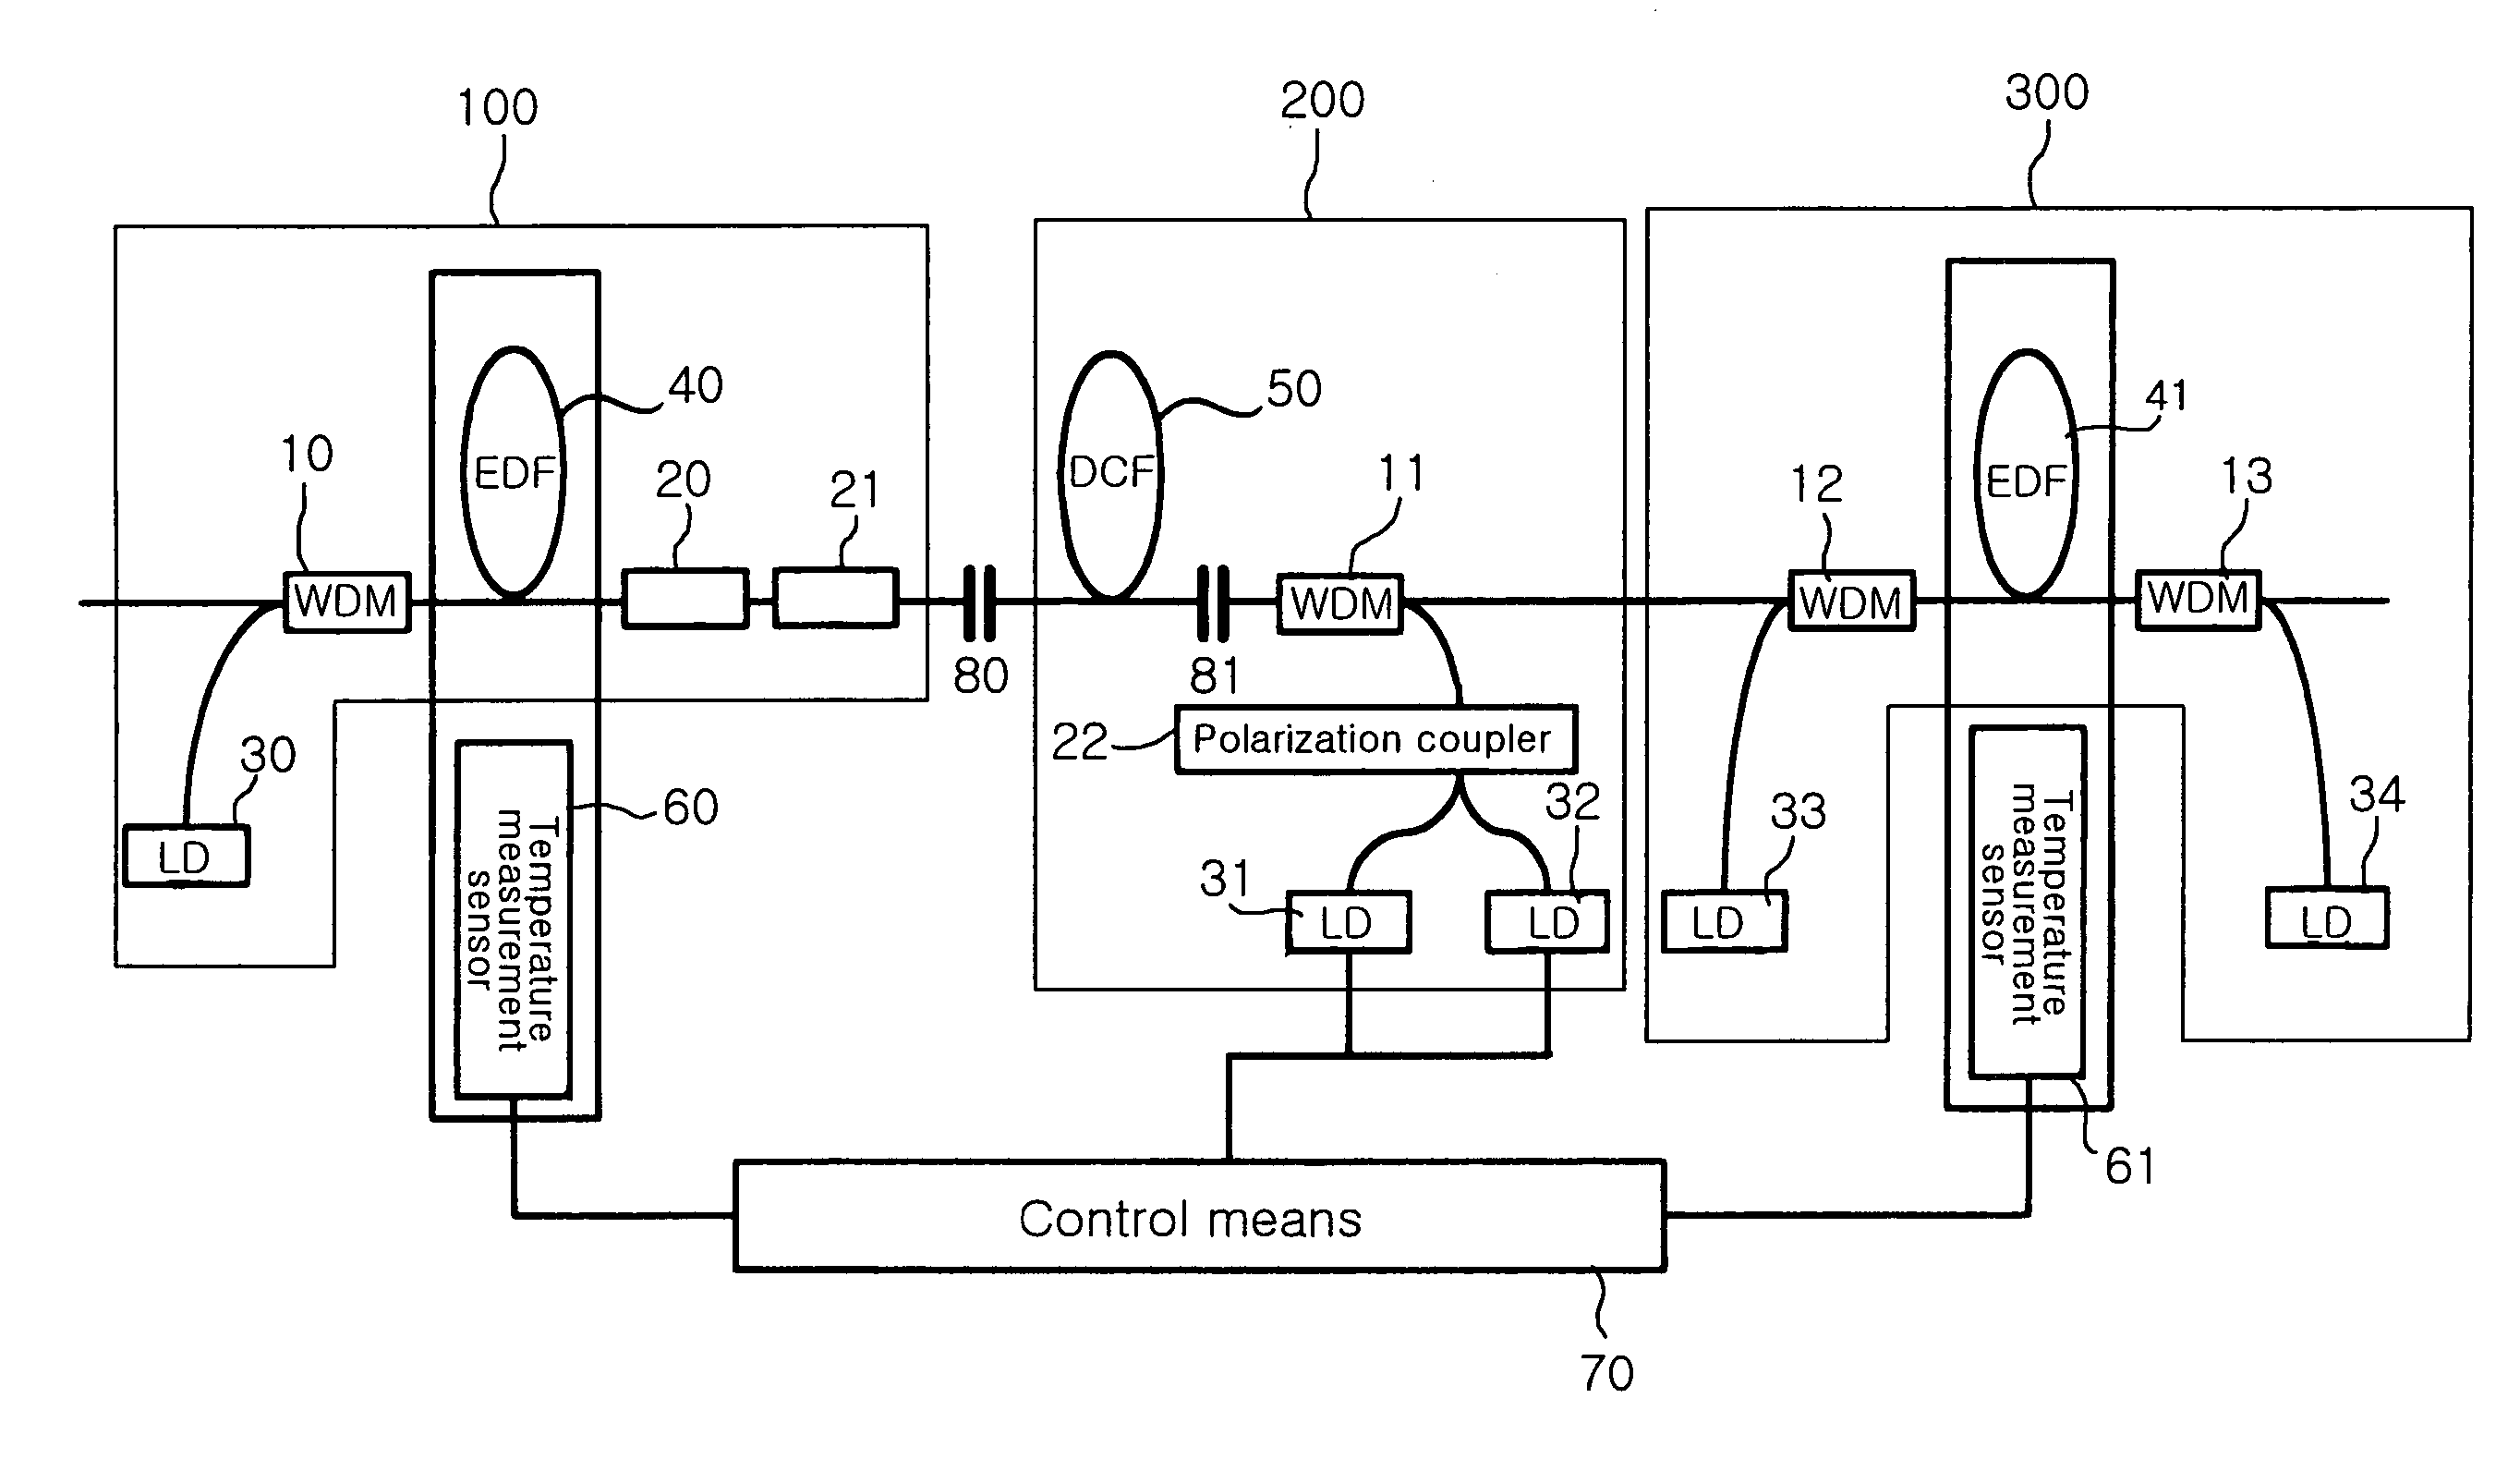 Apparatus and method for gain-spectrum-tilt compensation in long-wavelength band dispersion-compensating hybrid fiber amplifier